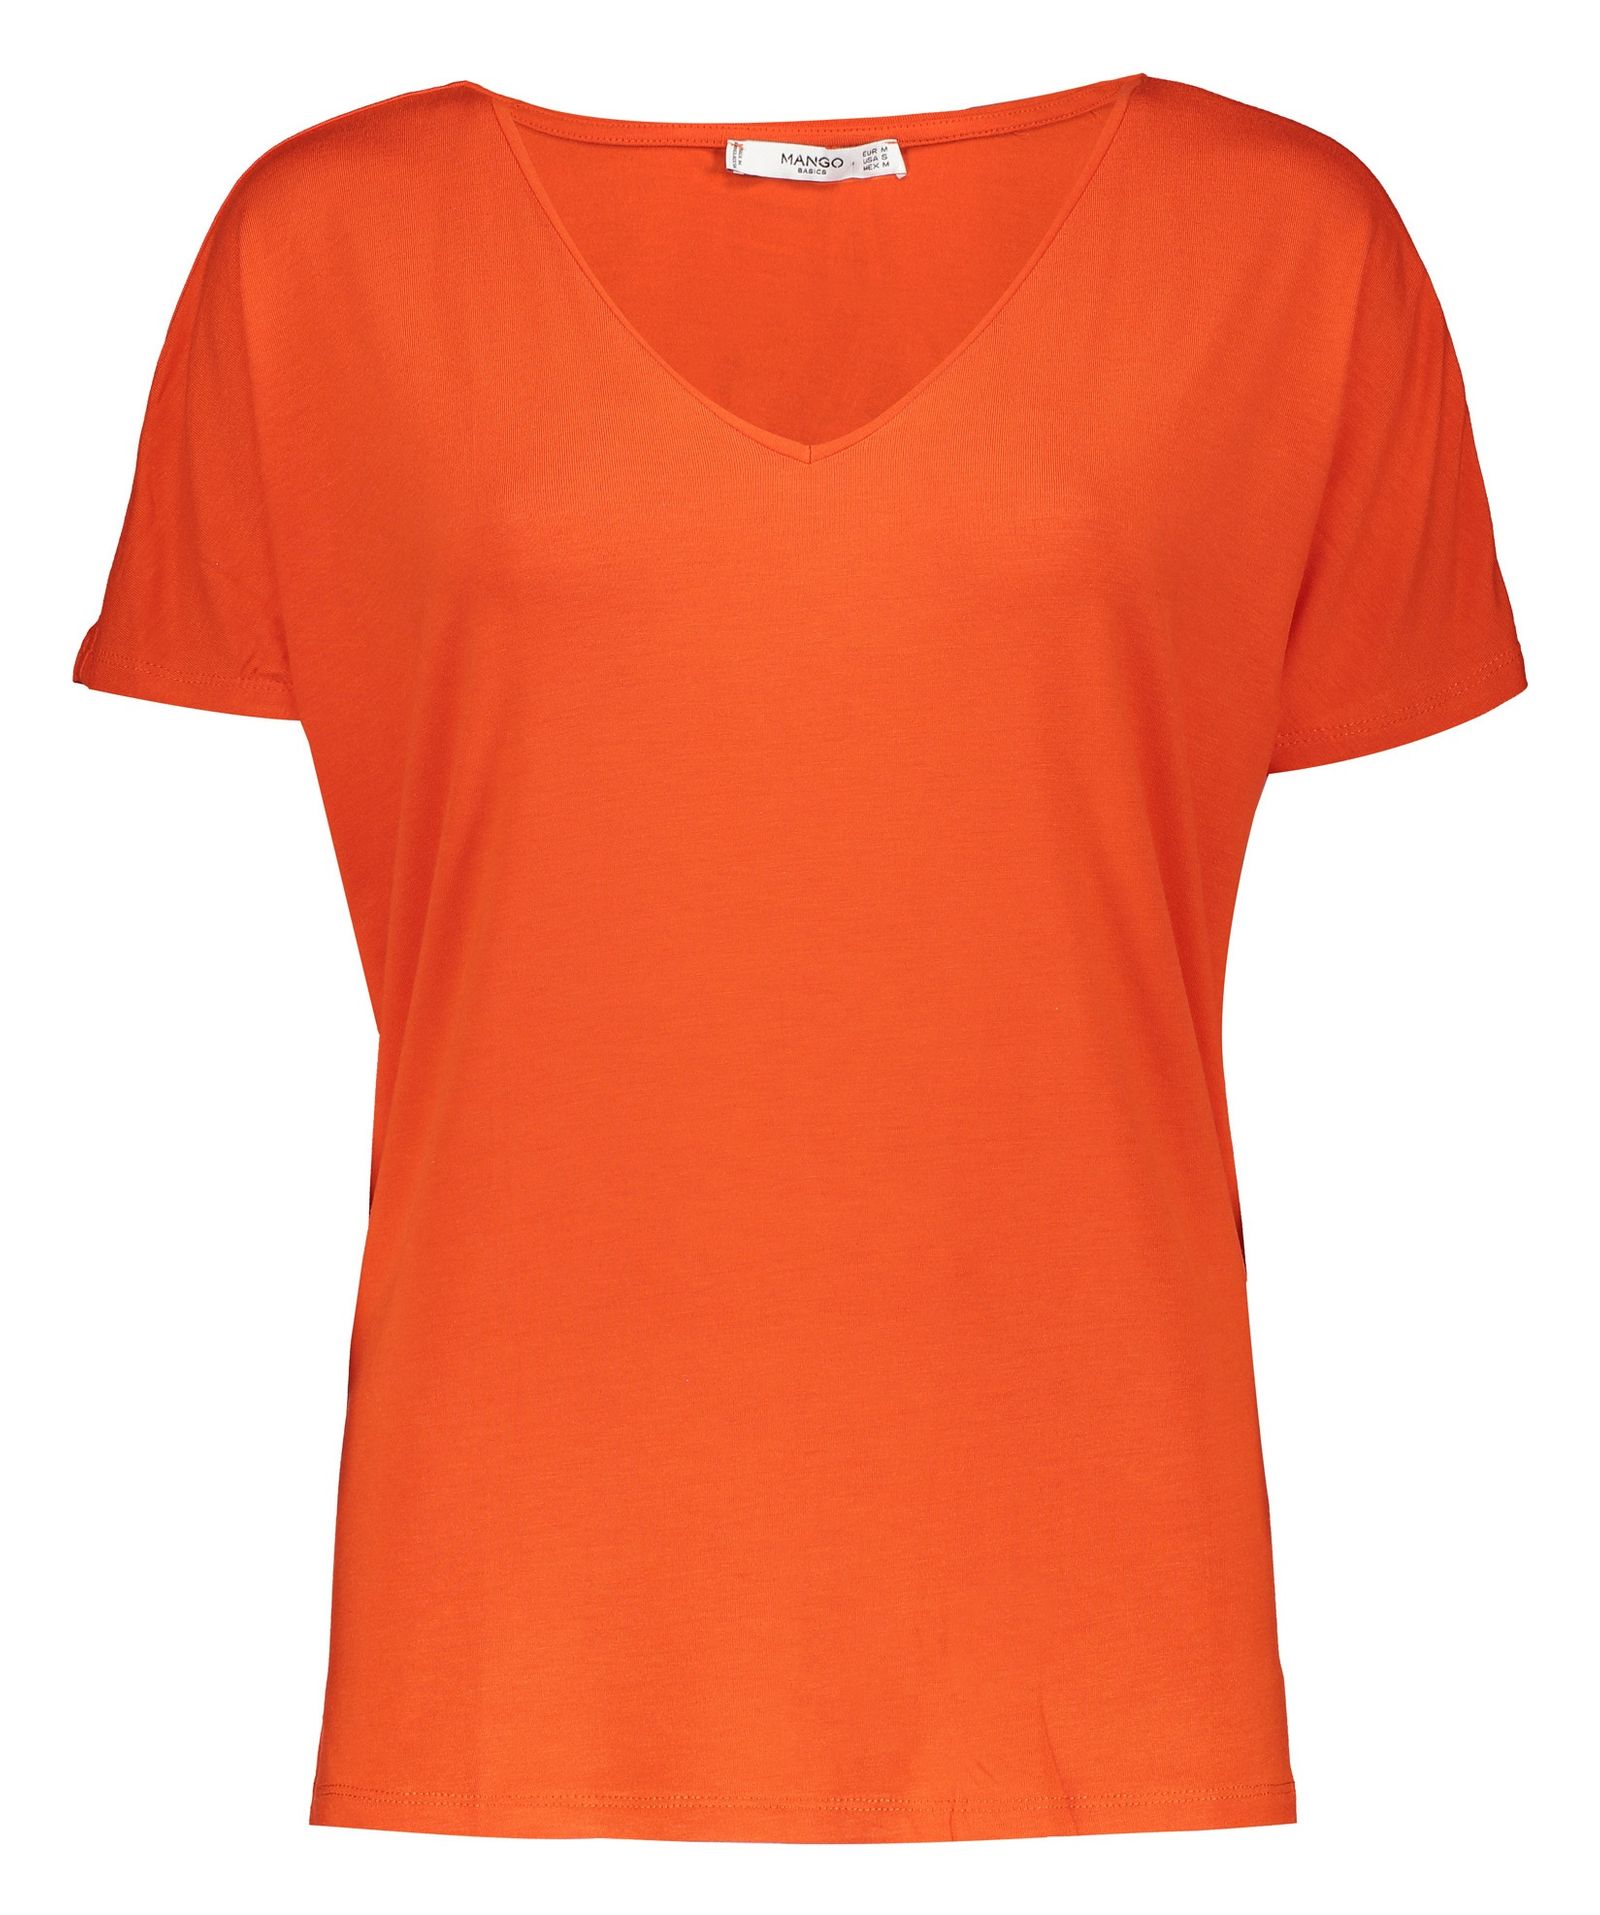 تی شرت ویسکوز یقه هفت زنانه - مانگو - نارنجی - 2